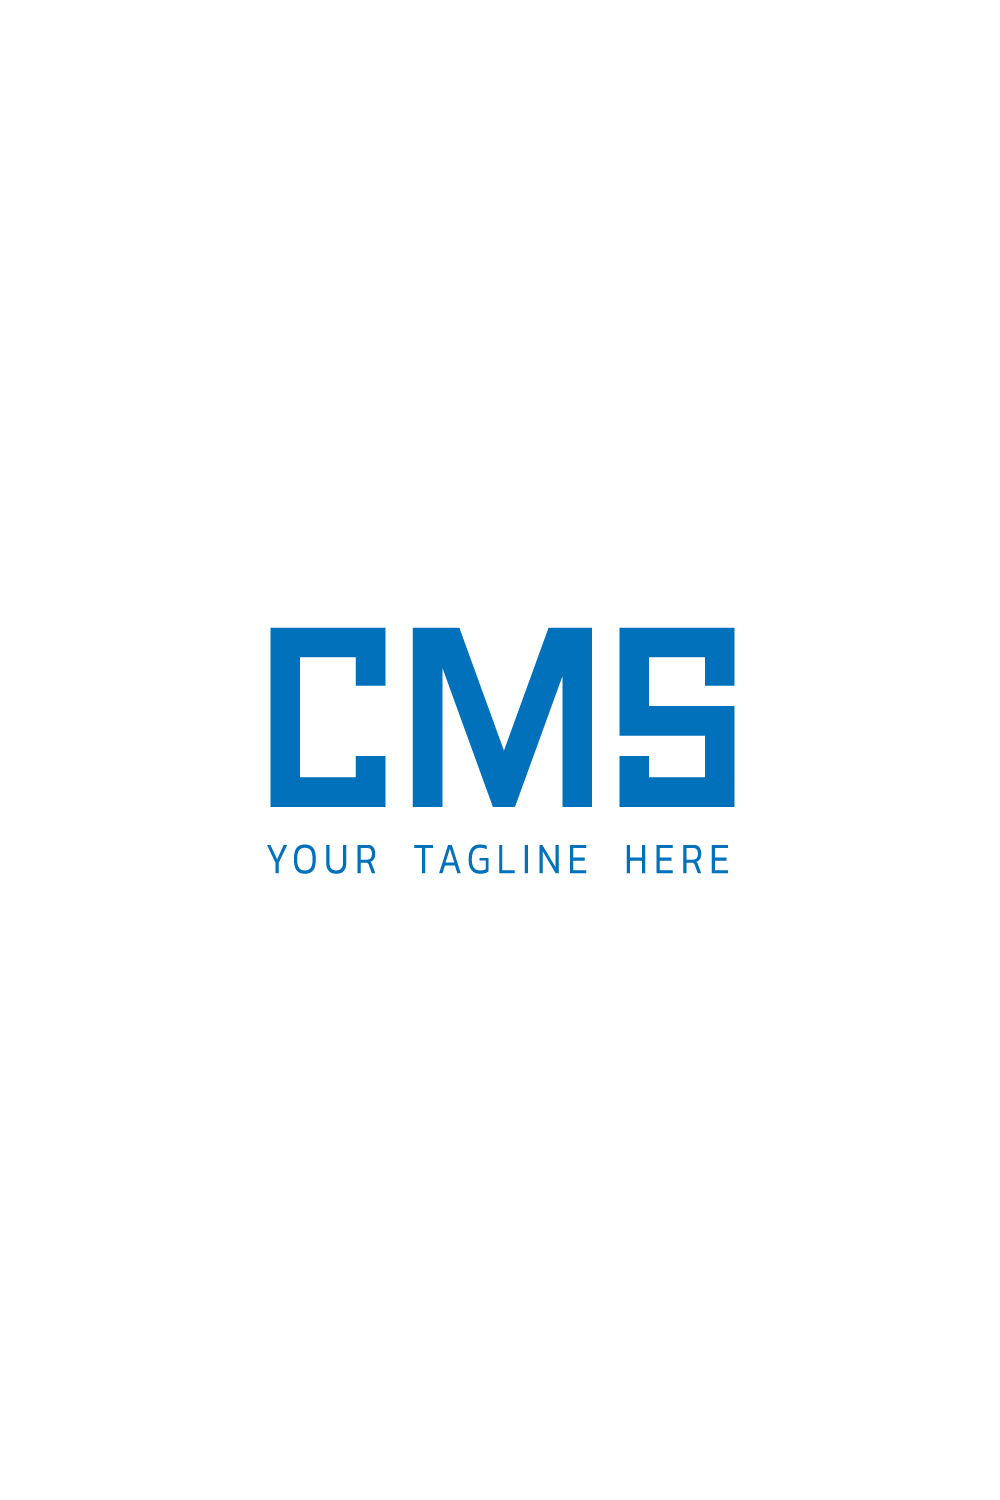 CSM logo, Letters logo , monogram logo, lettersmark pinterest preview image.